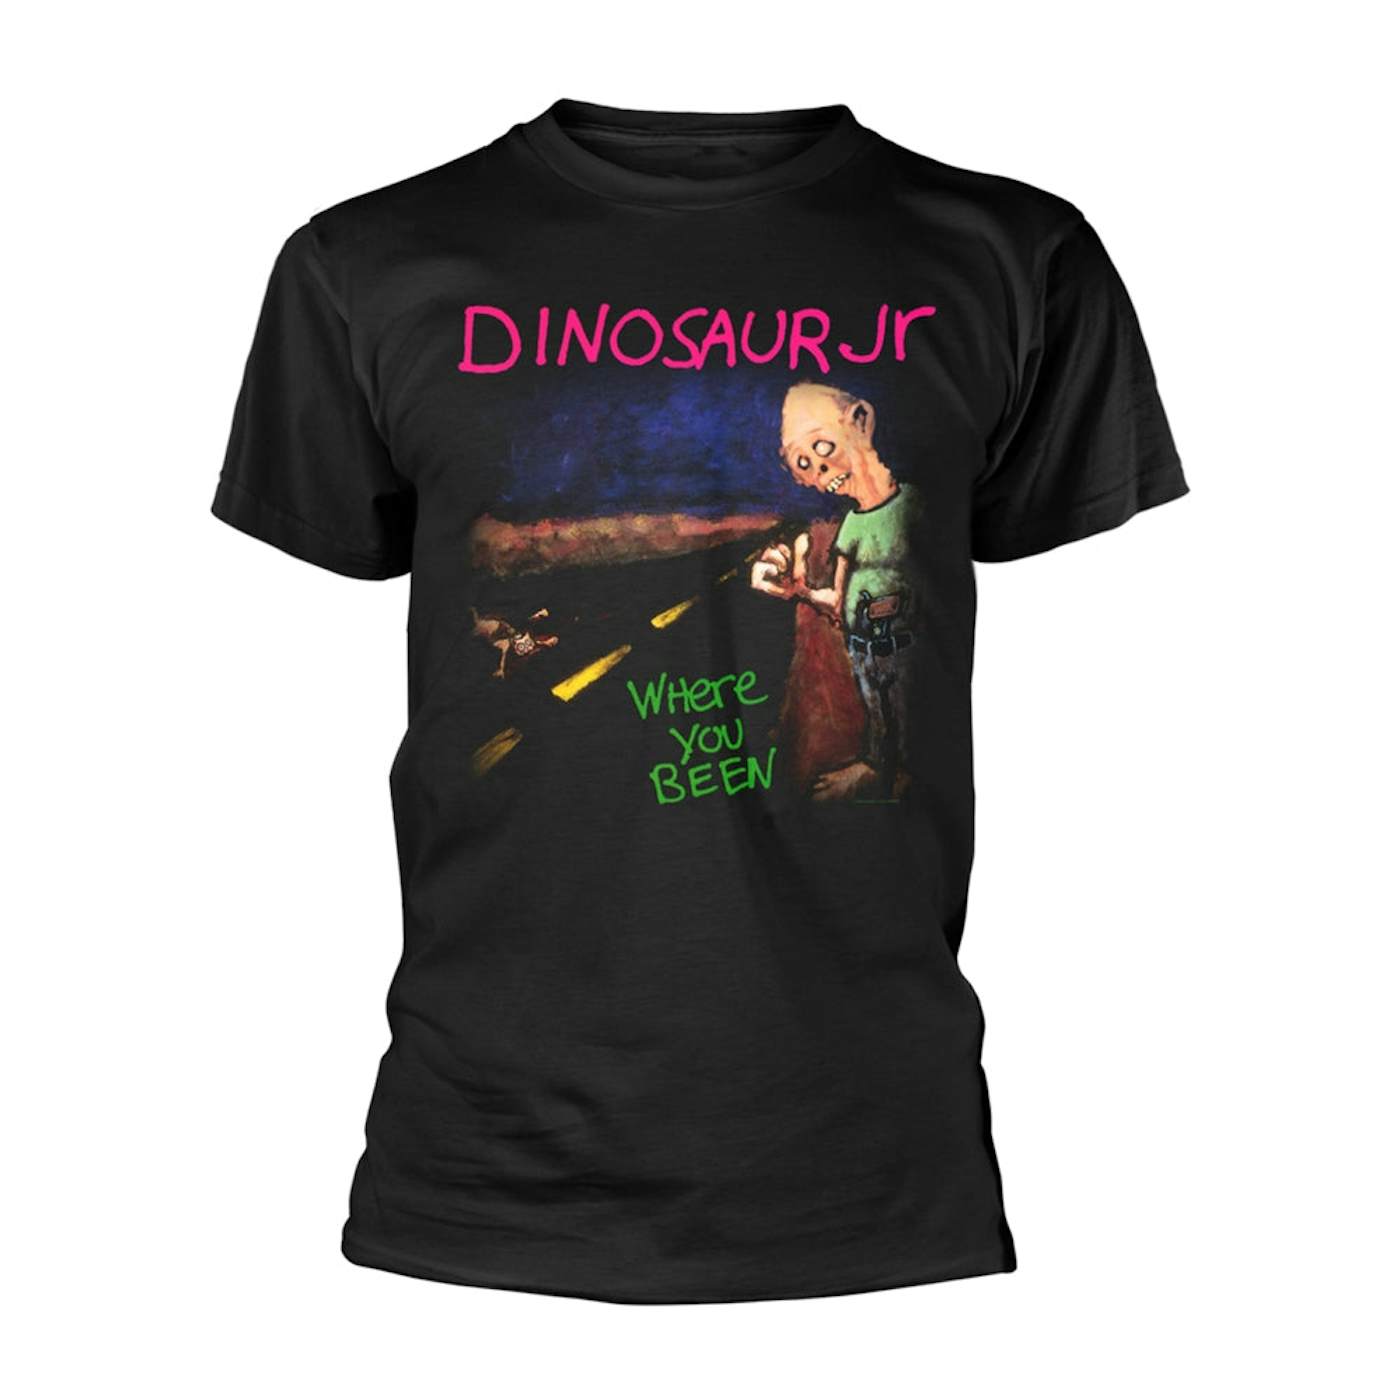 Dinosaur Jr. T Shirt - Where You Been (Black)